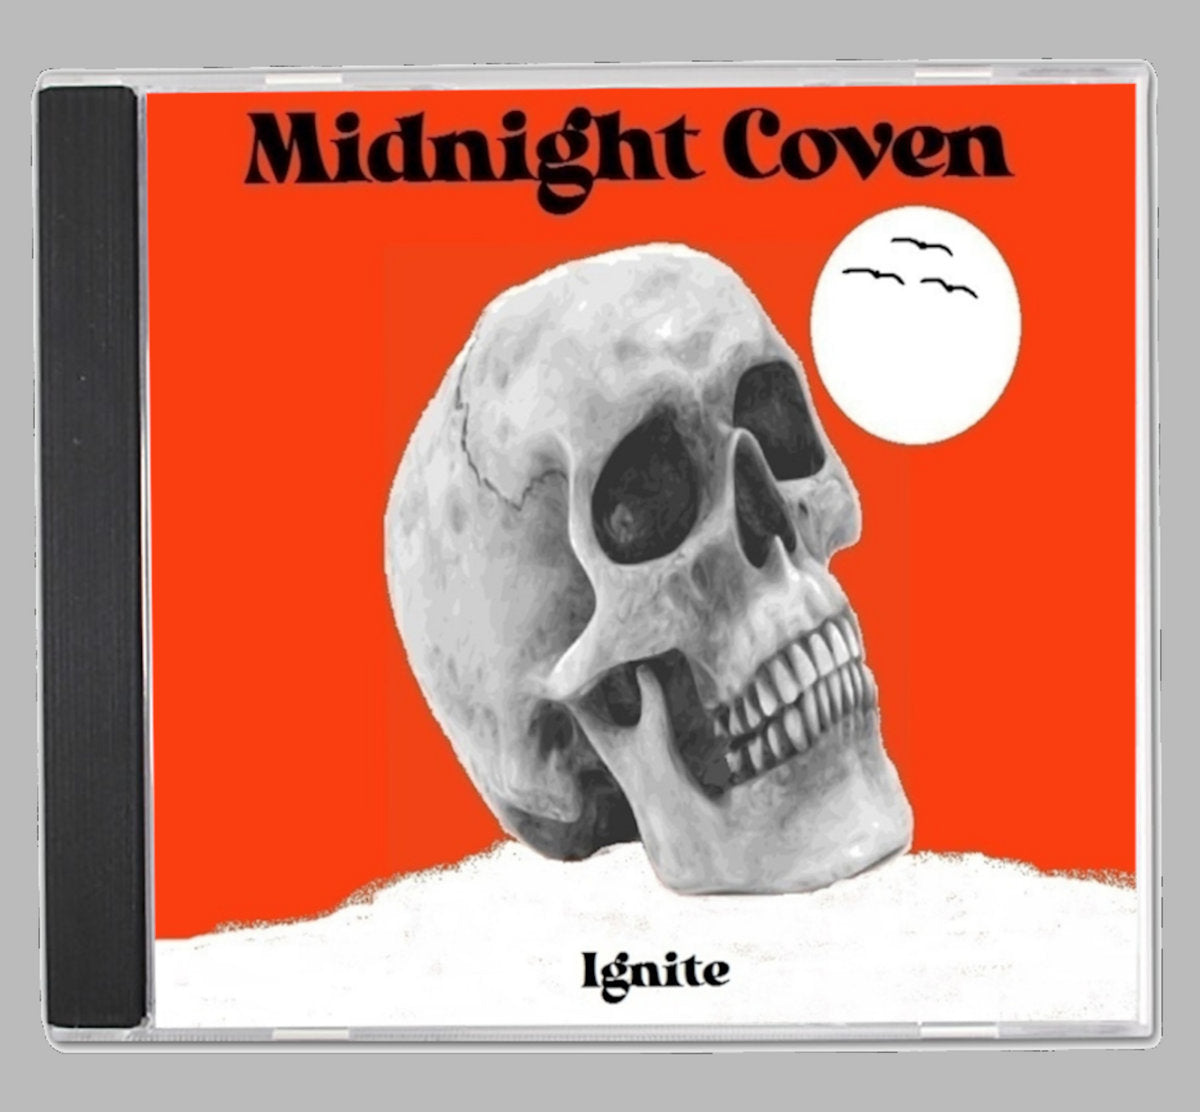 Midnight Coven - "Ignite" Compact Disc